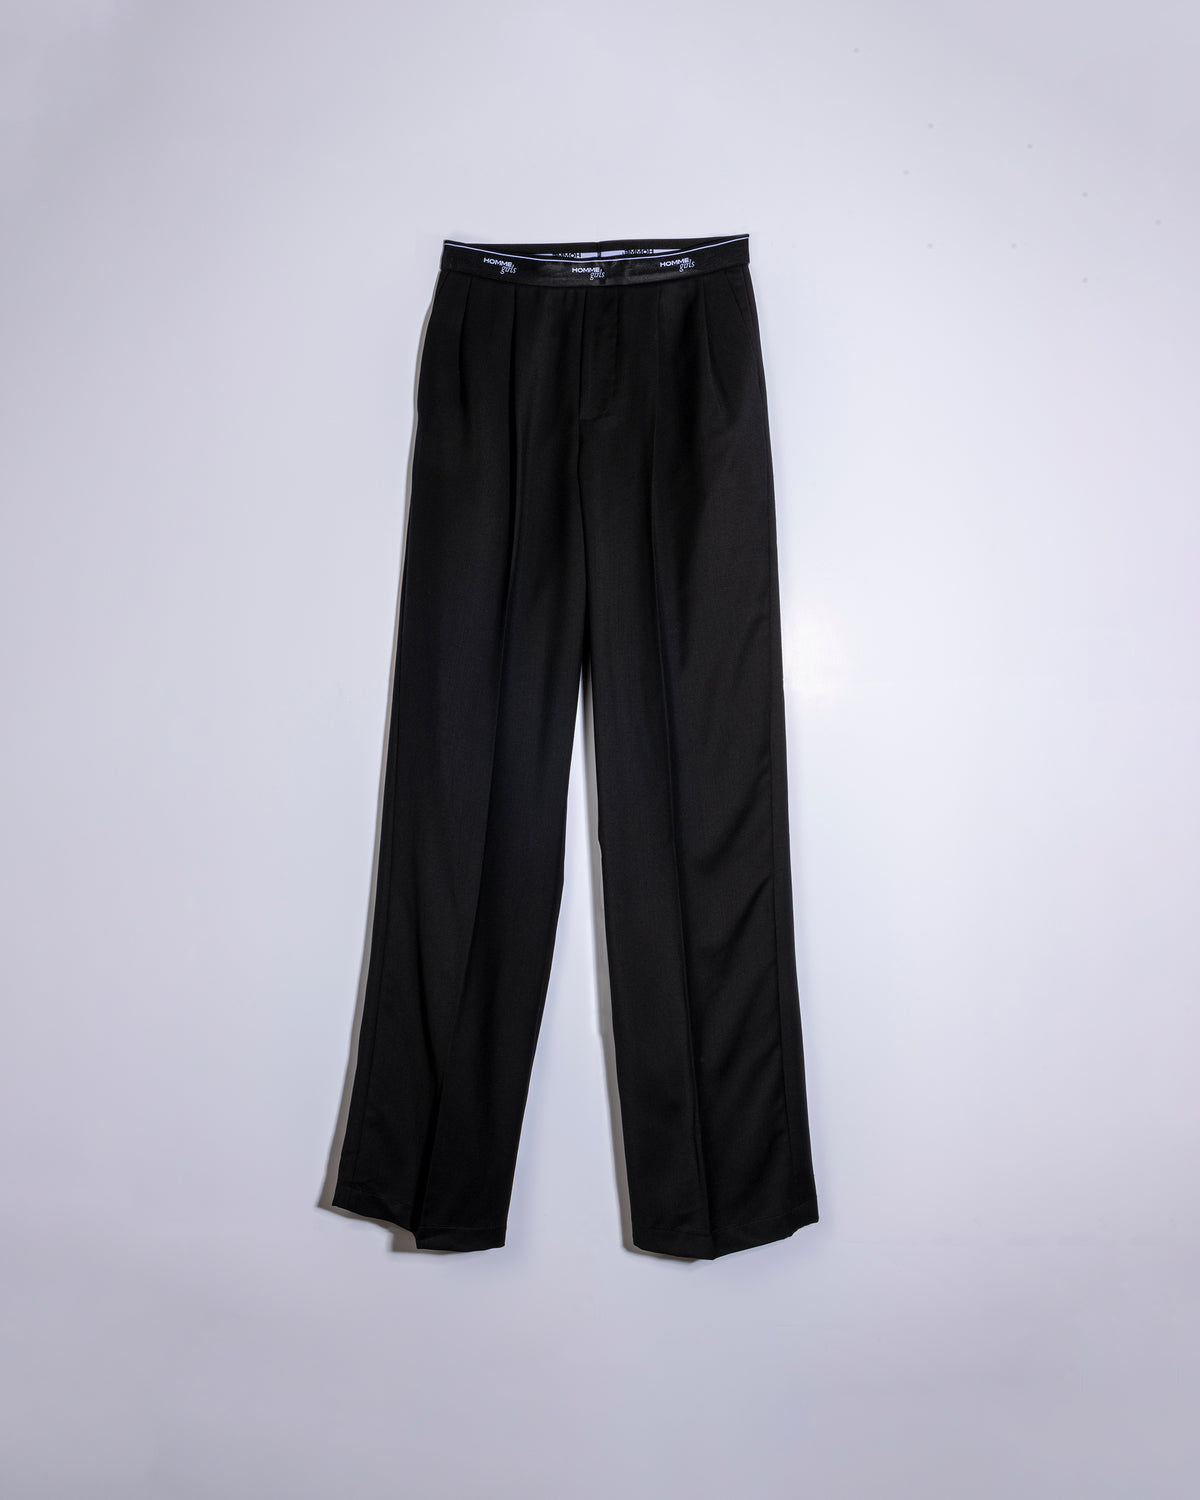 Black Tuxedo Pant – HOMMEGIRLS